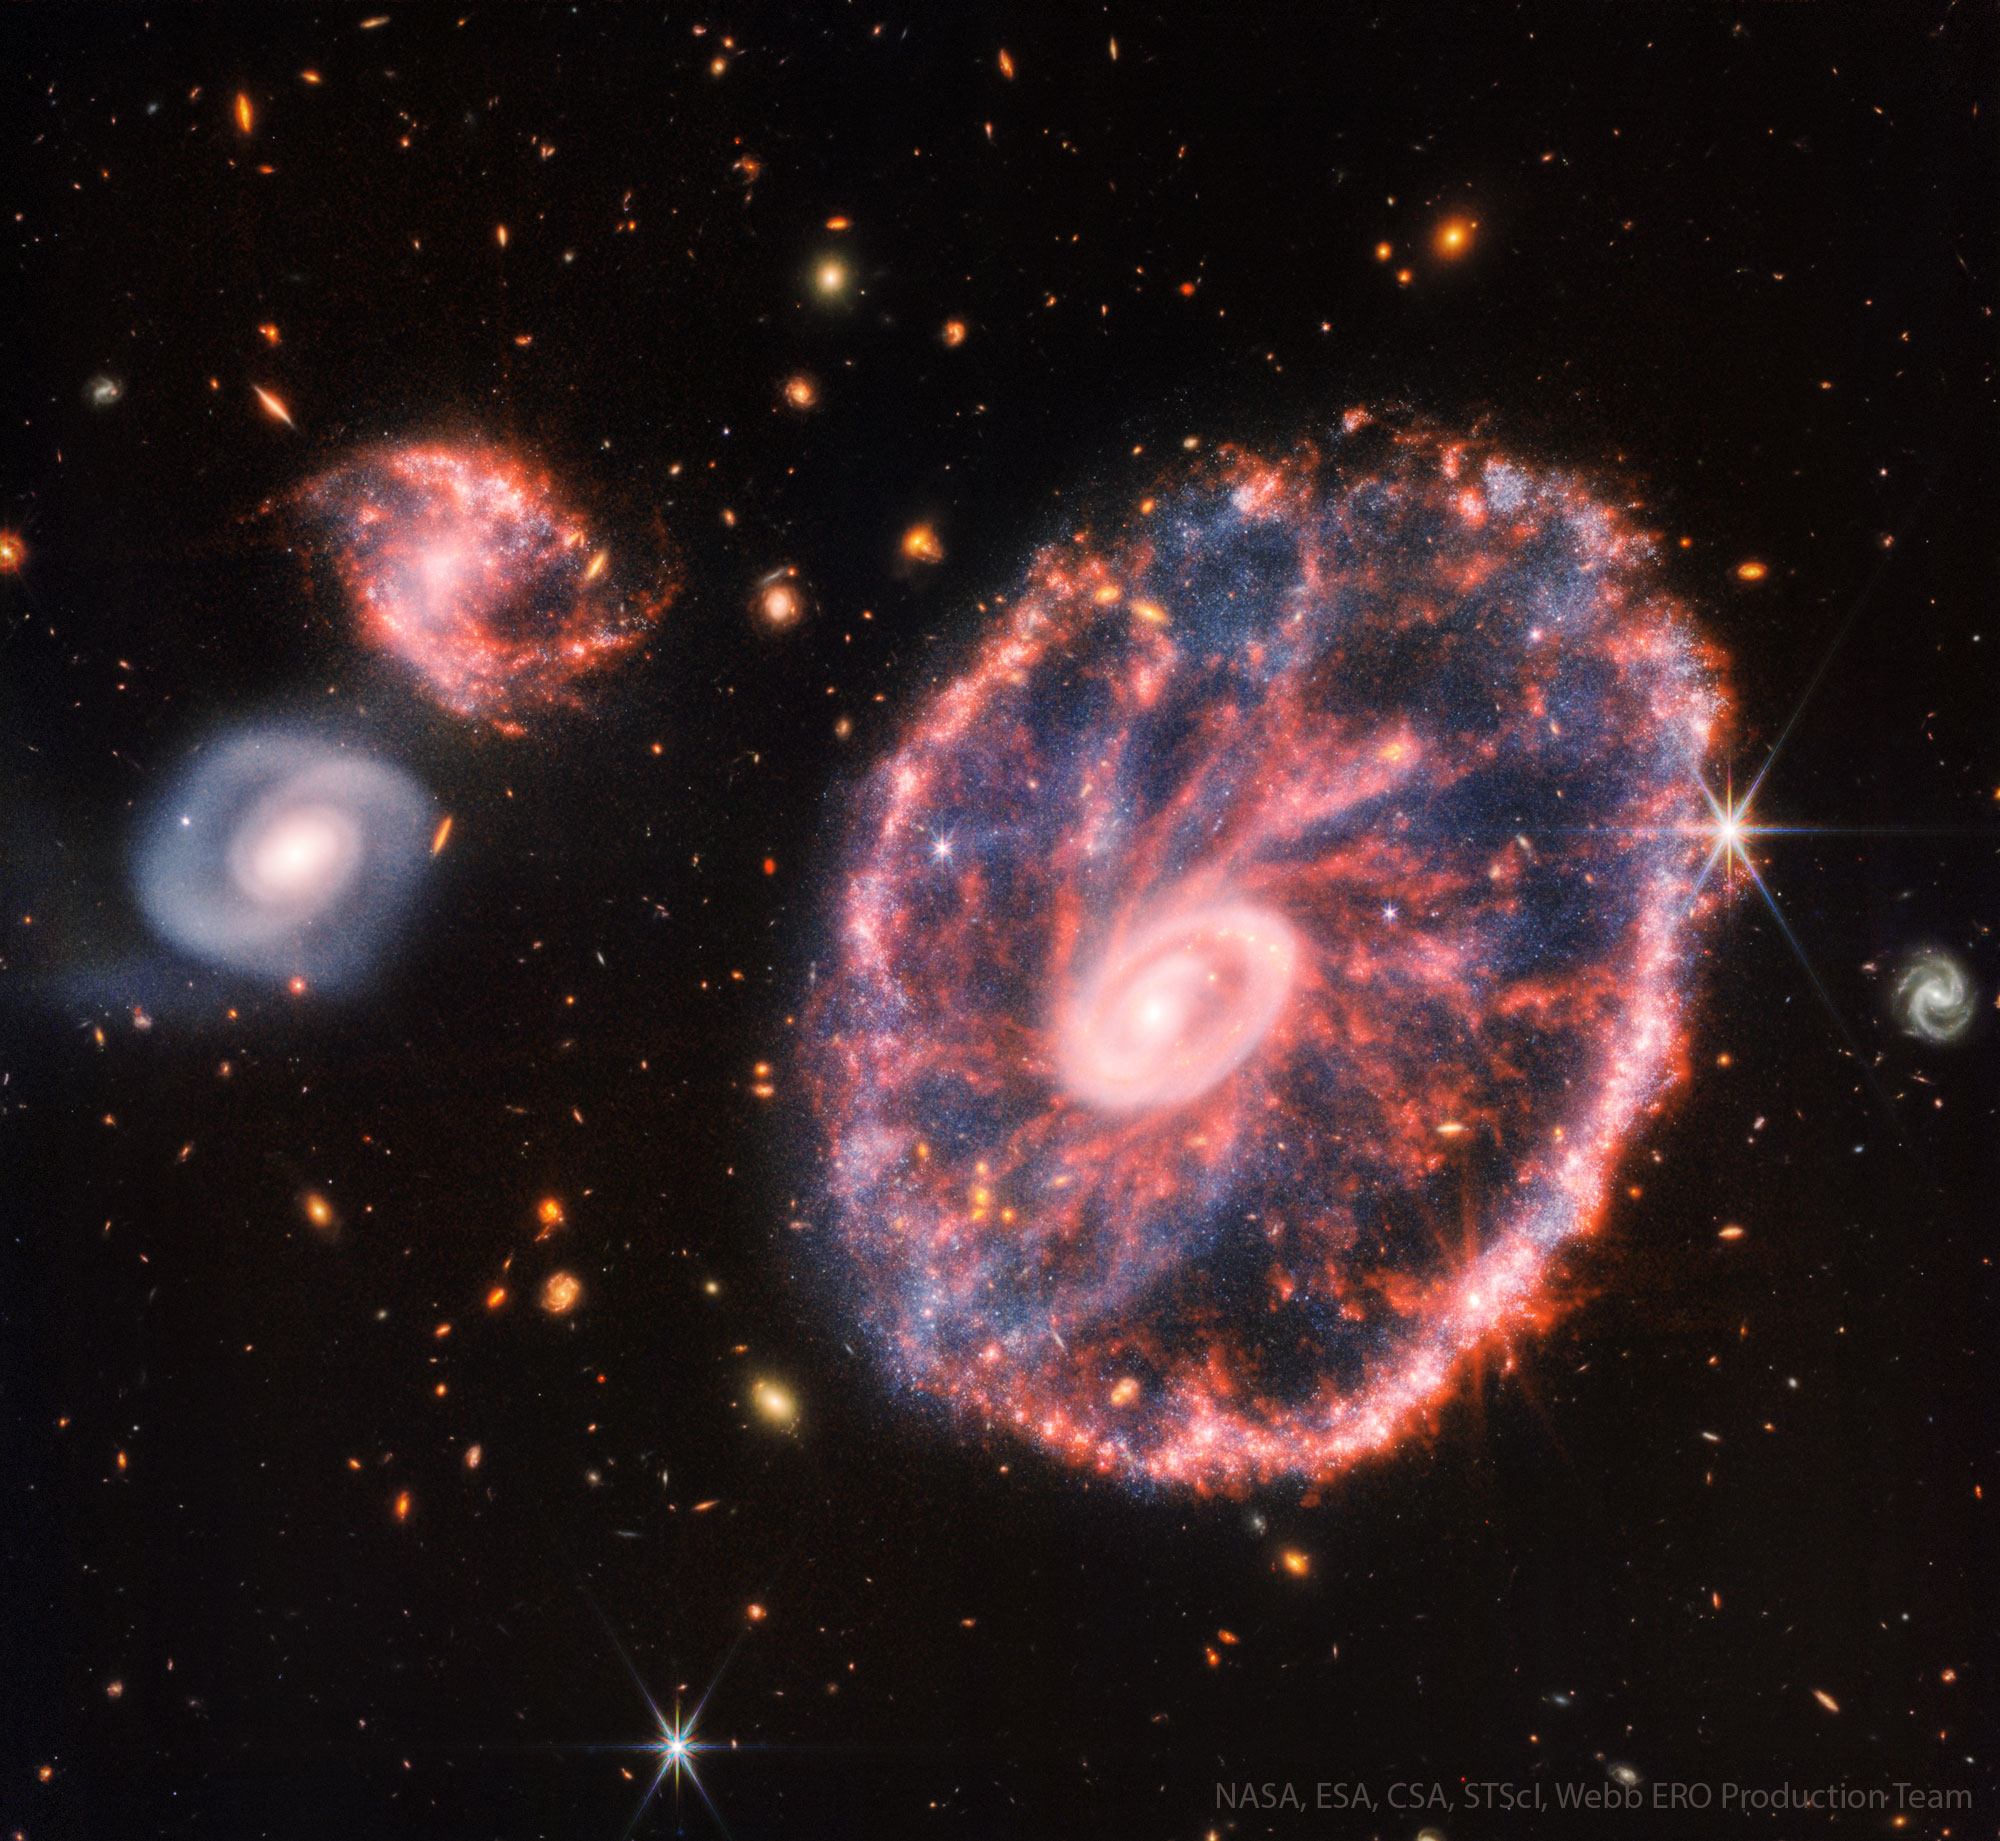 The Cartwheel Galaxy from Webb